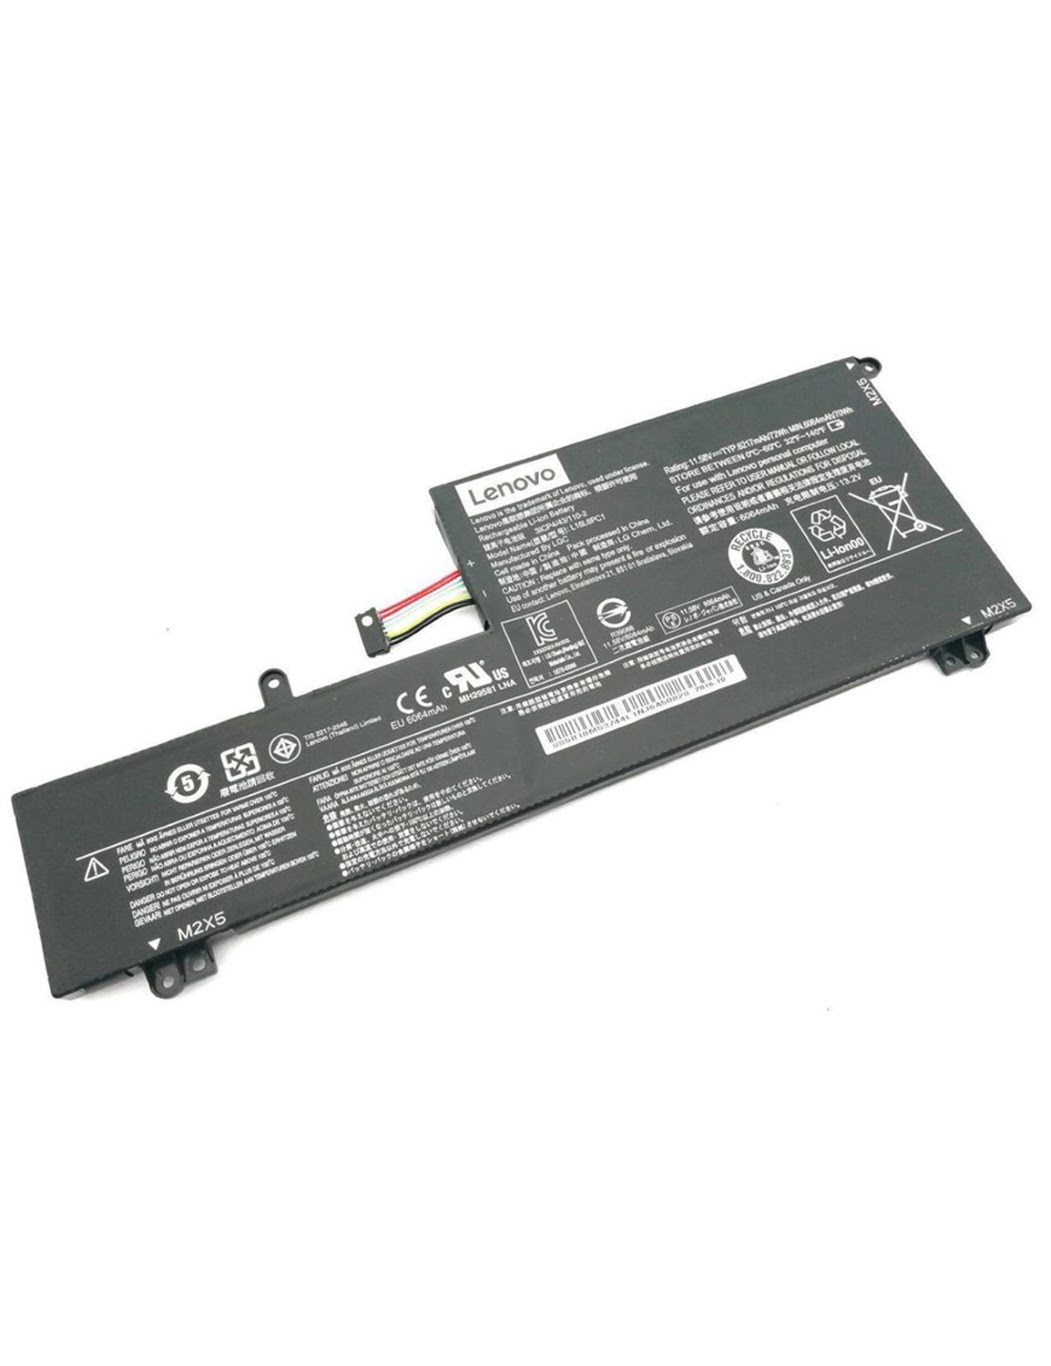 3ICP4/43/110-2, 5B10M53743 replacement Laptop Battery for Lenovo Yoga 720, Yoga 720-15, 11.52v / 11.58v, 6268mah / 72wh